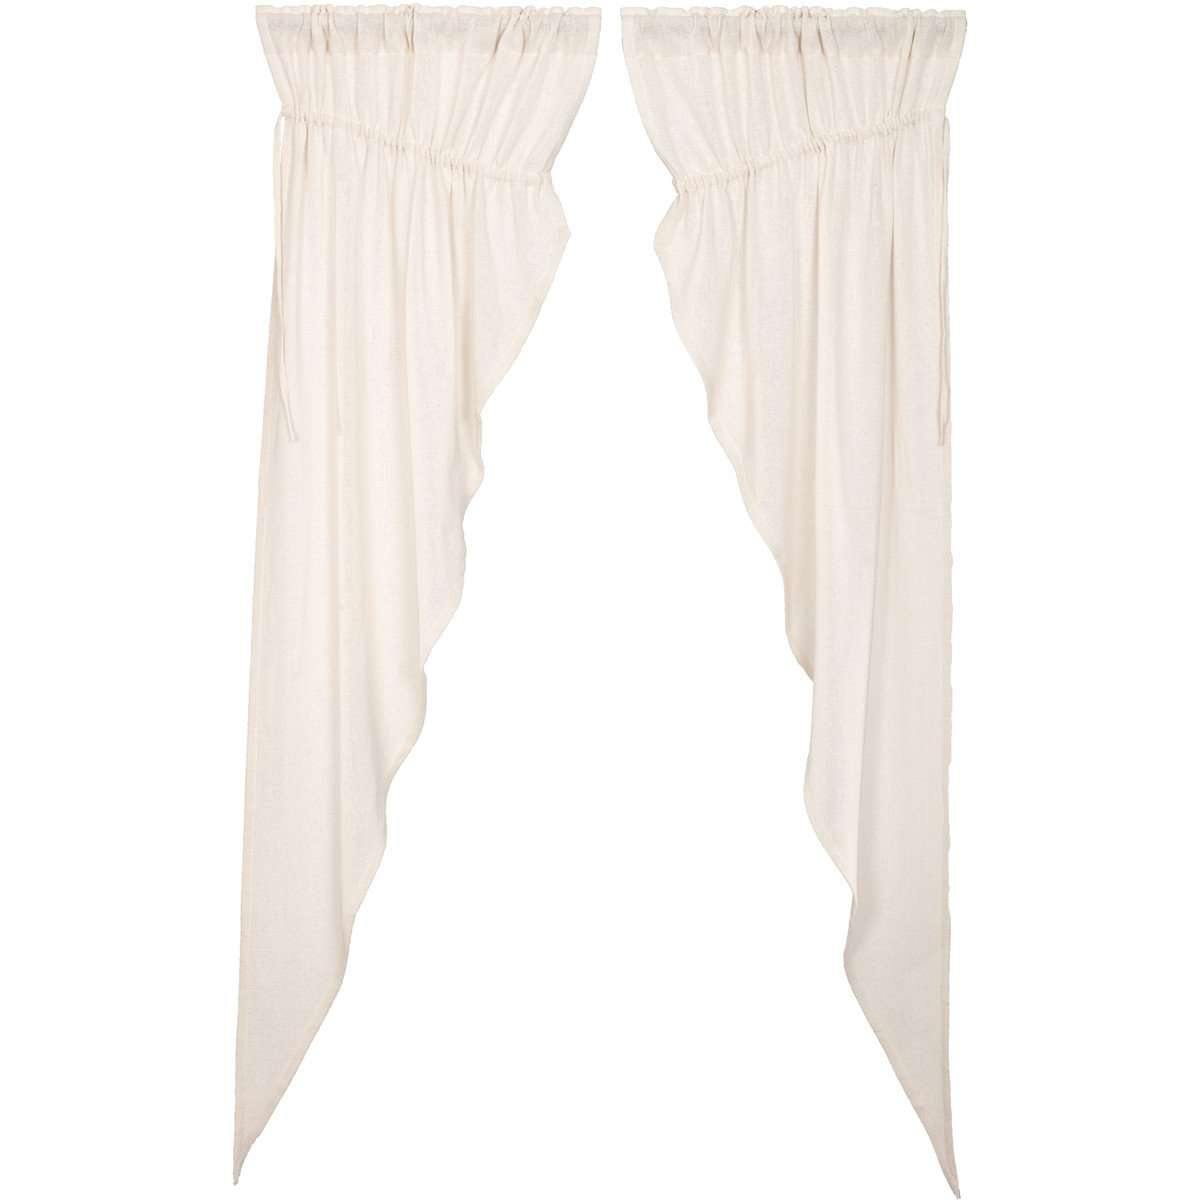 Burlap Antique White Prairie Long Panel Curtain Set of 2 84x36x18 VHC Brands - The Fox Decor